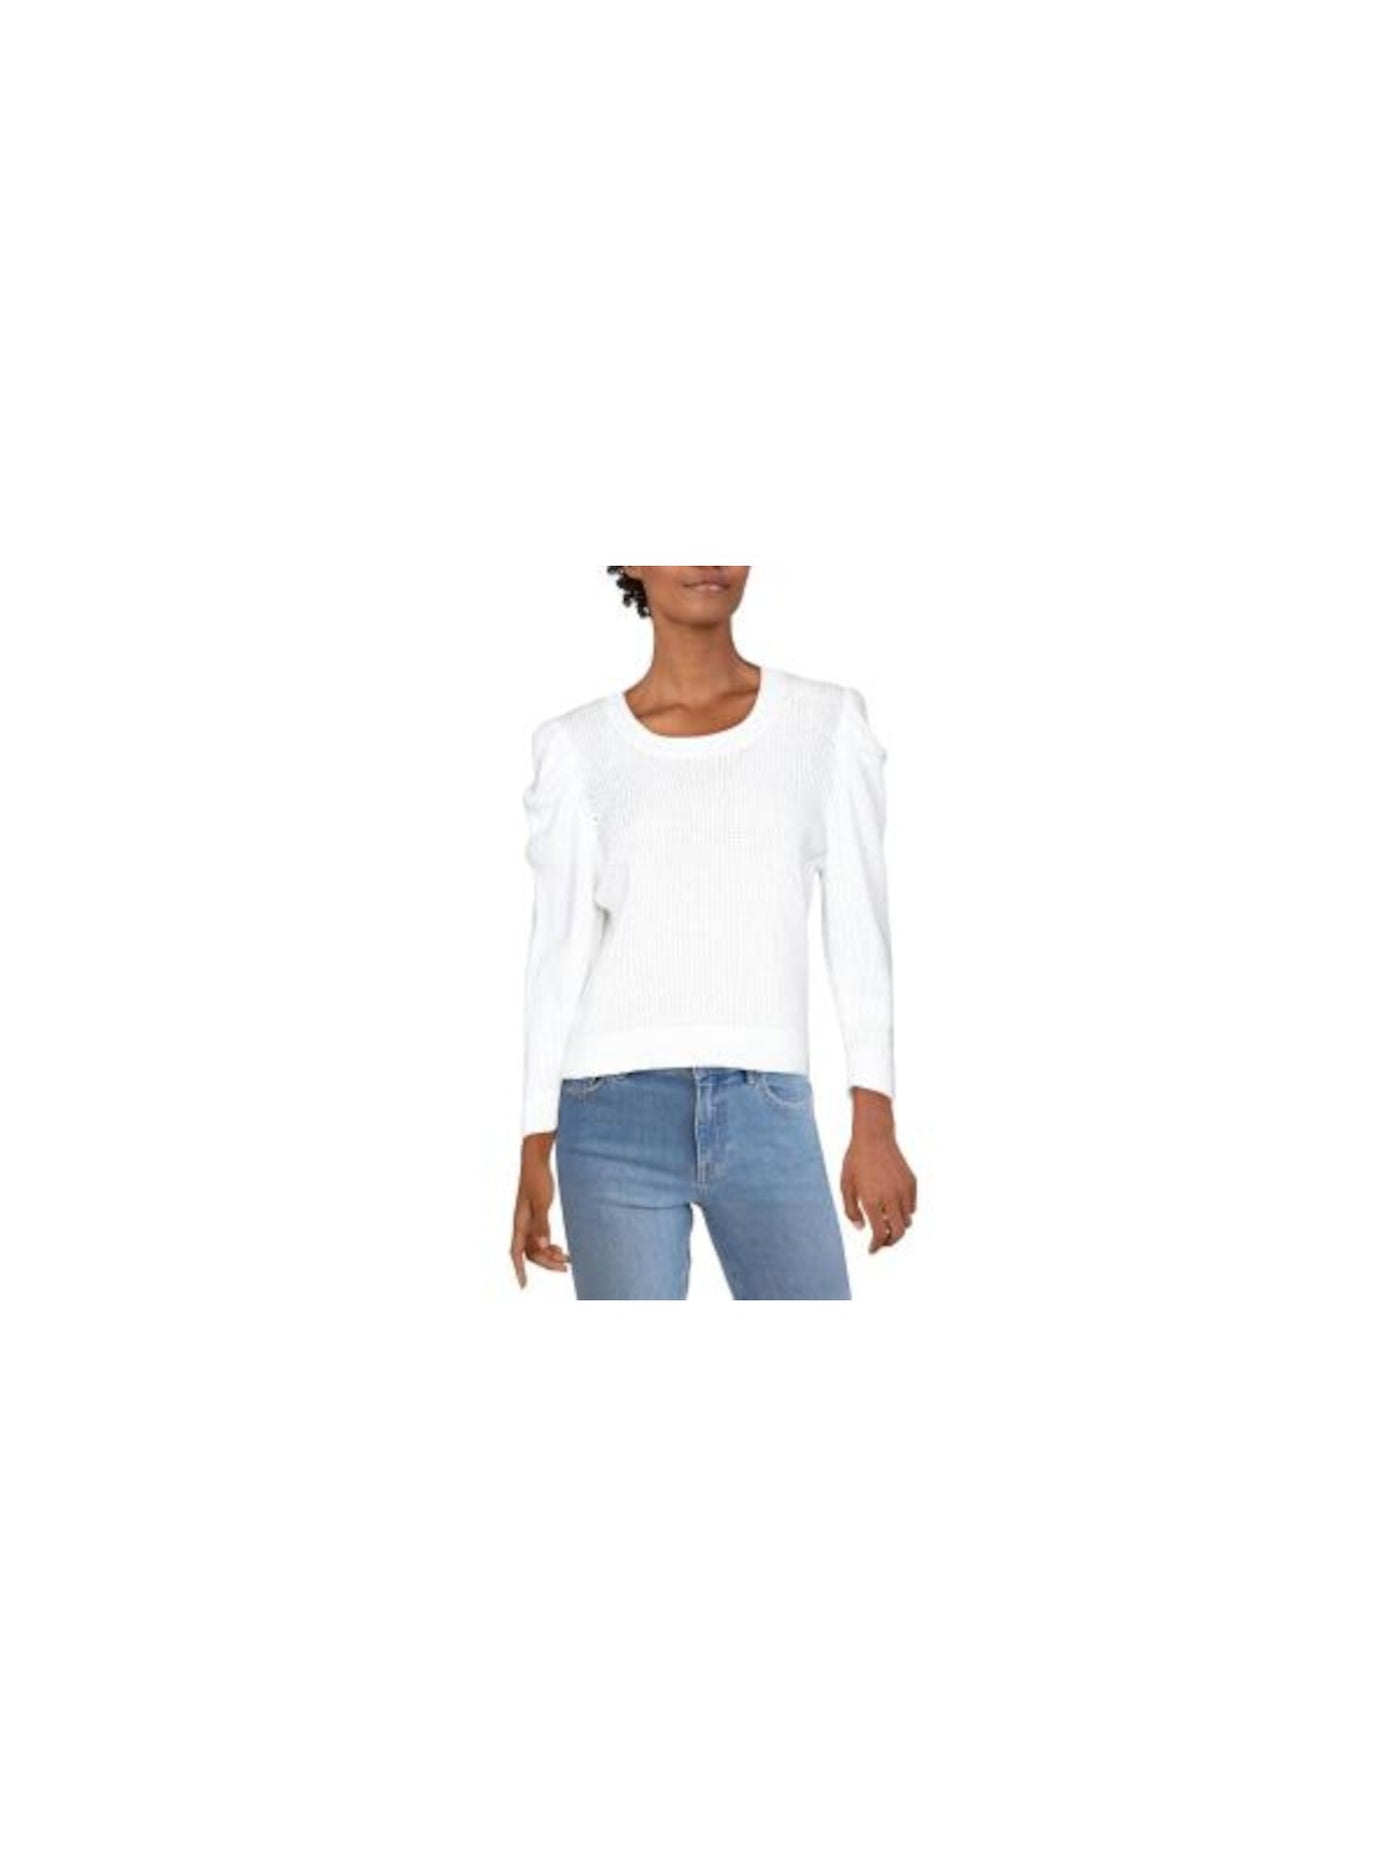 IRO.JEANS Womens White Long Sleeve Jewel Neck Sweater Size: L